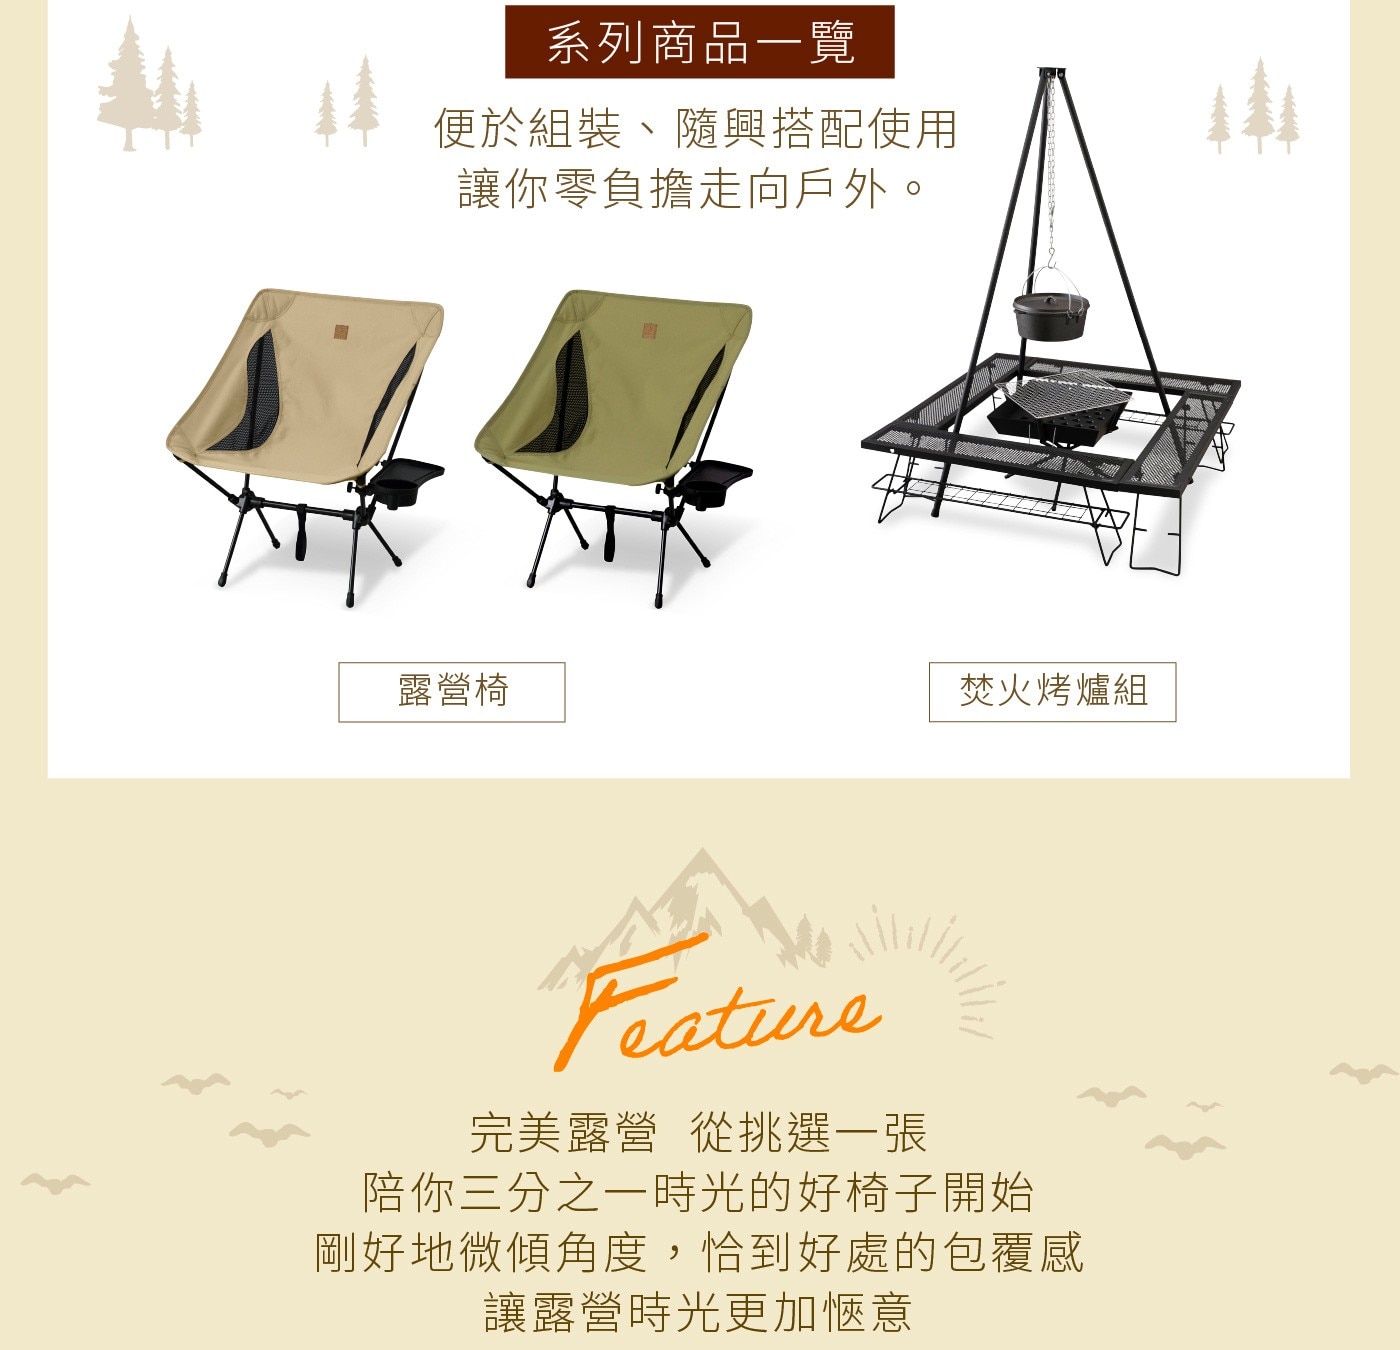 IRIS OHYAMA 露營摺疊椅 CC-LOW椅面含網格設計增加通風性附有便攜收納袋,收納搬運簡單俐落。乘坐時可裝設於本體上便於收納小東西